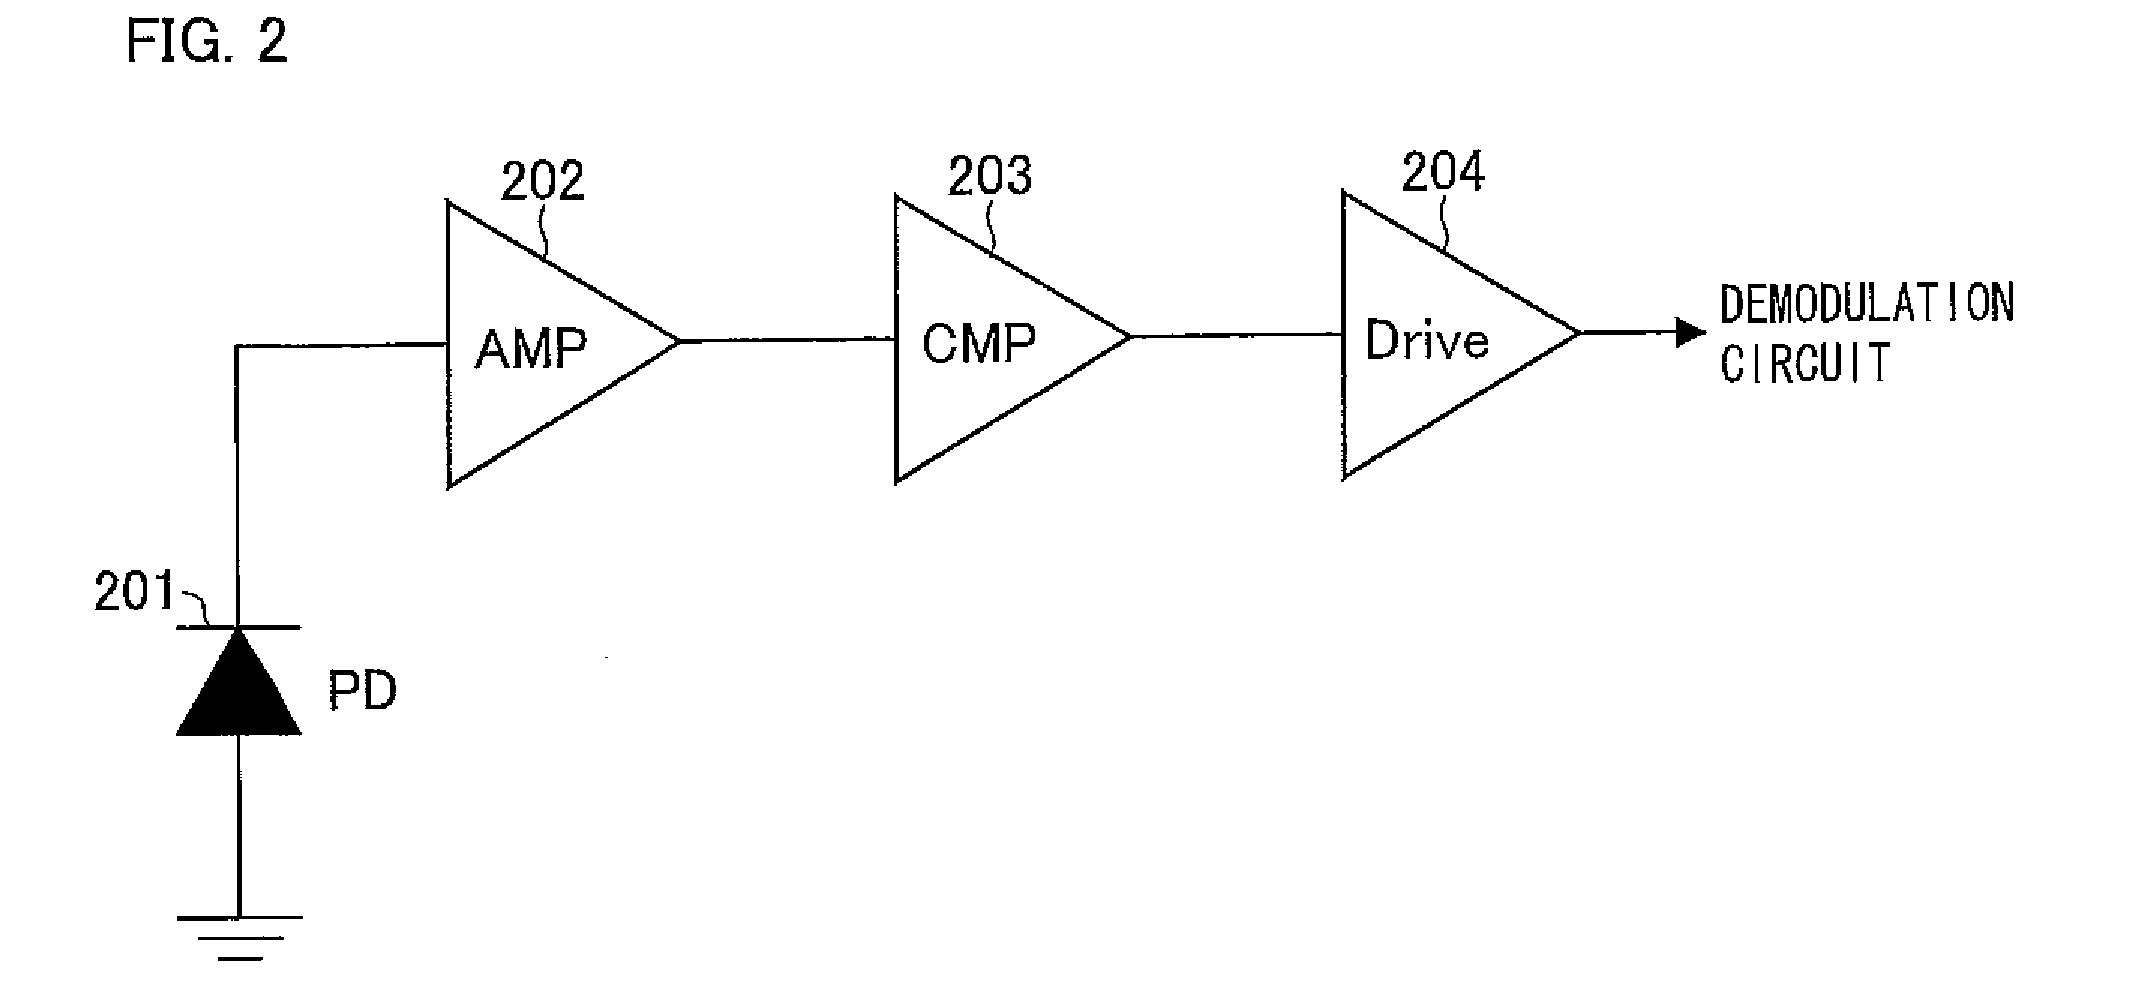 Demodulation circuit, ic, and communication device